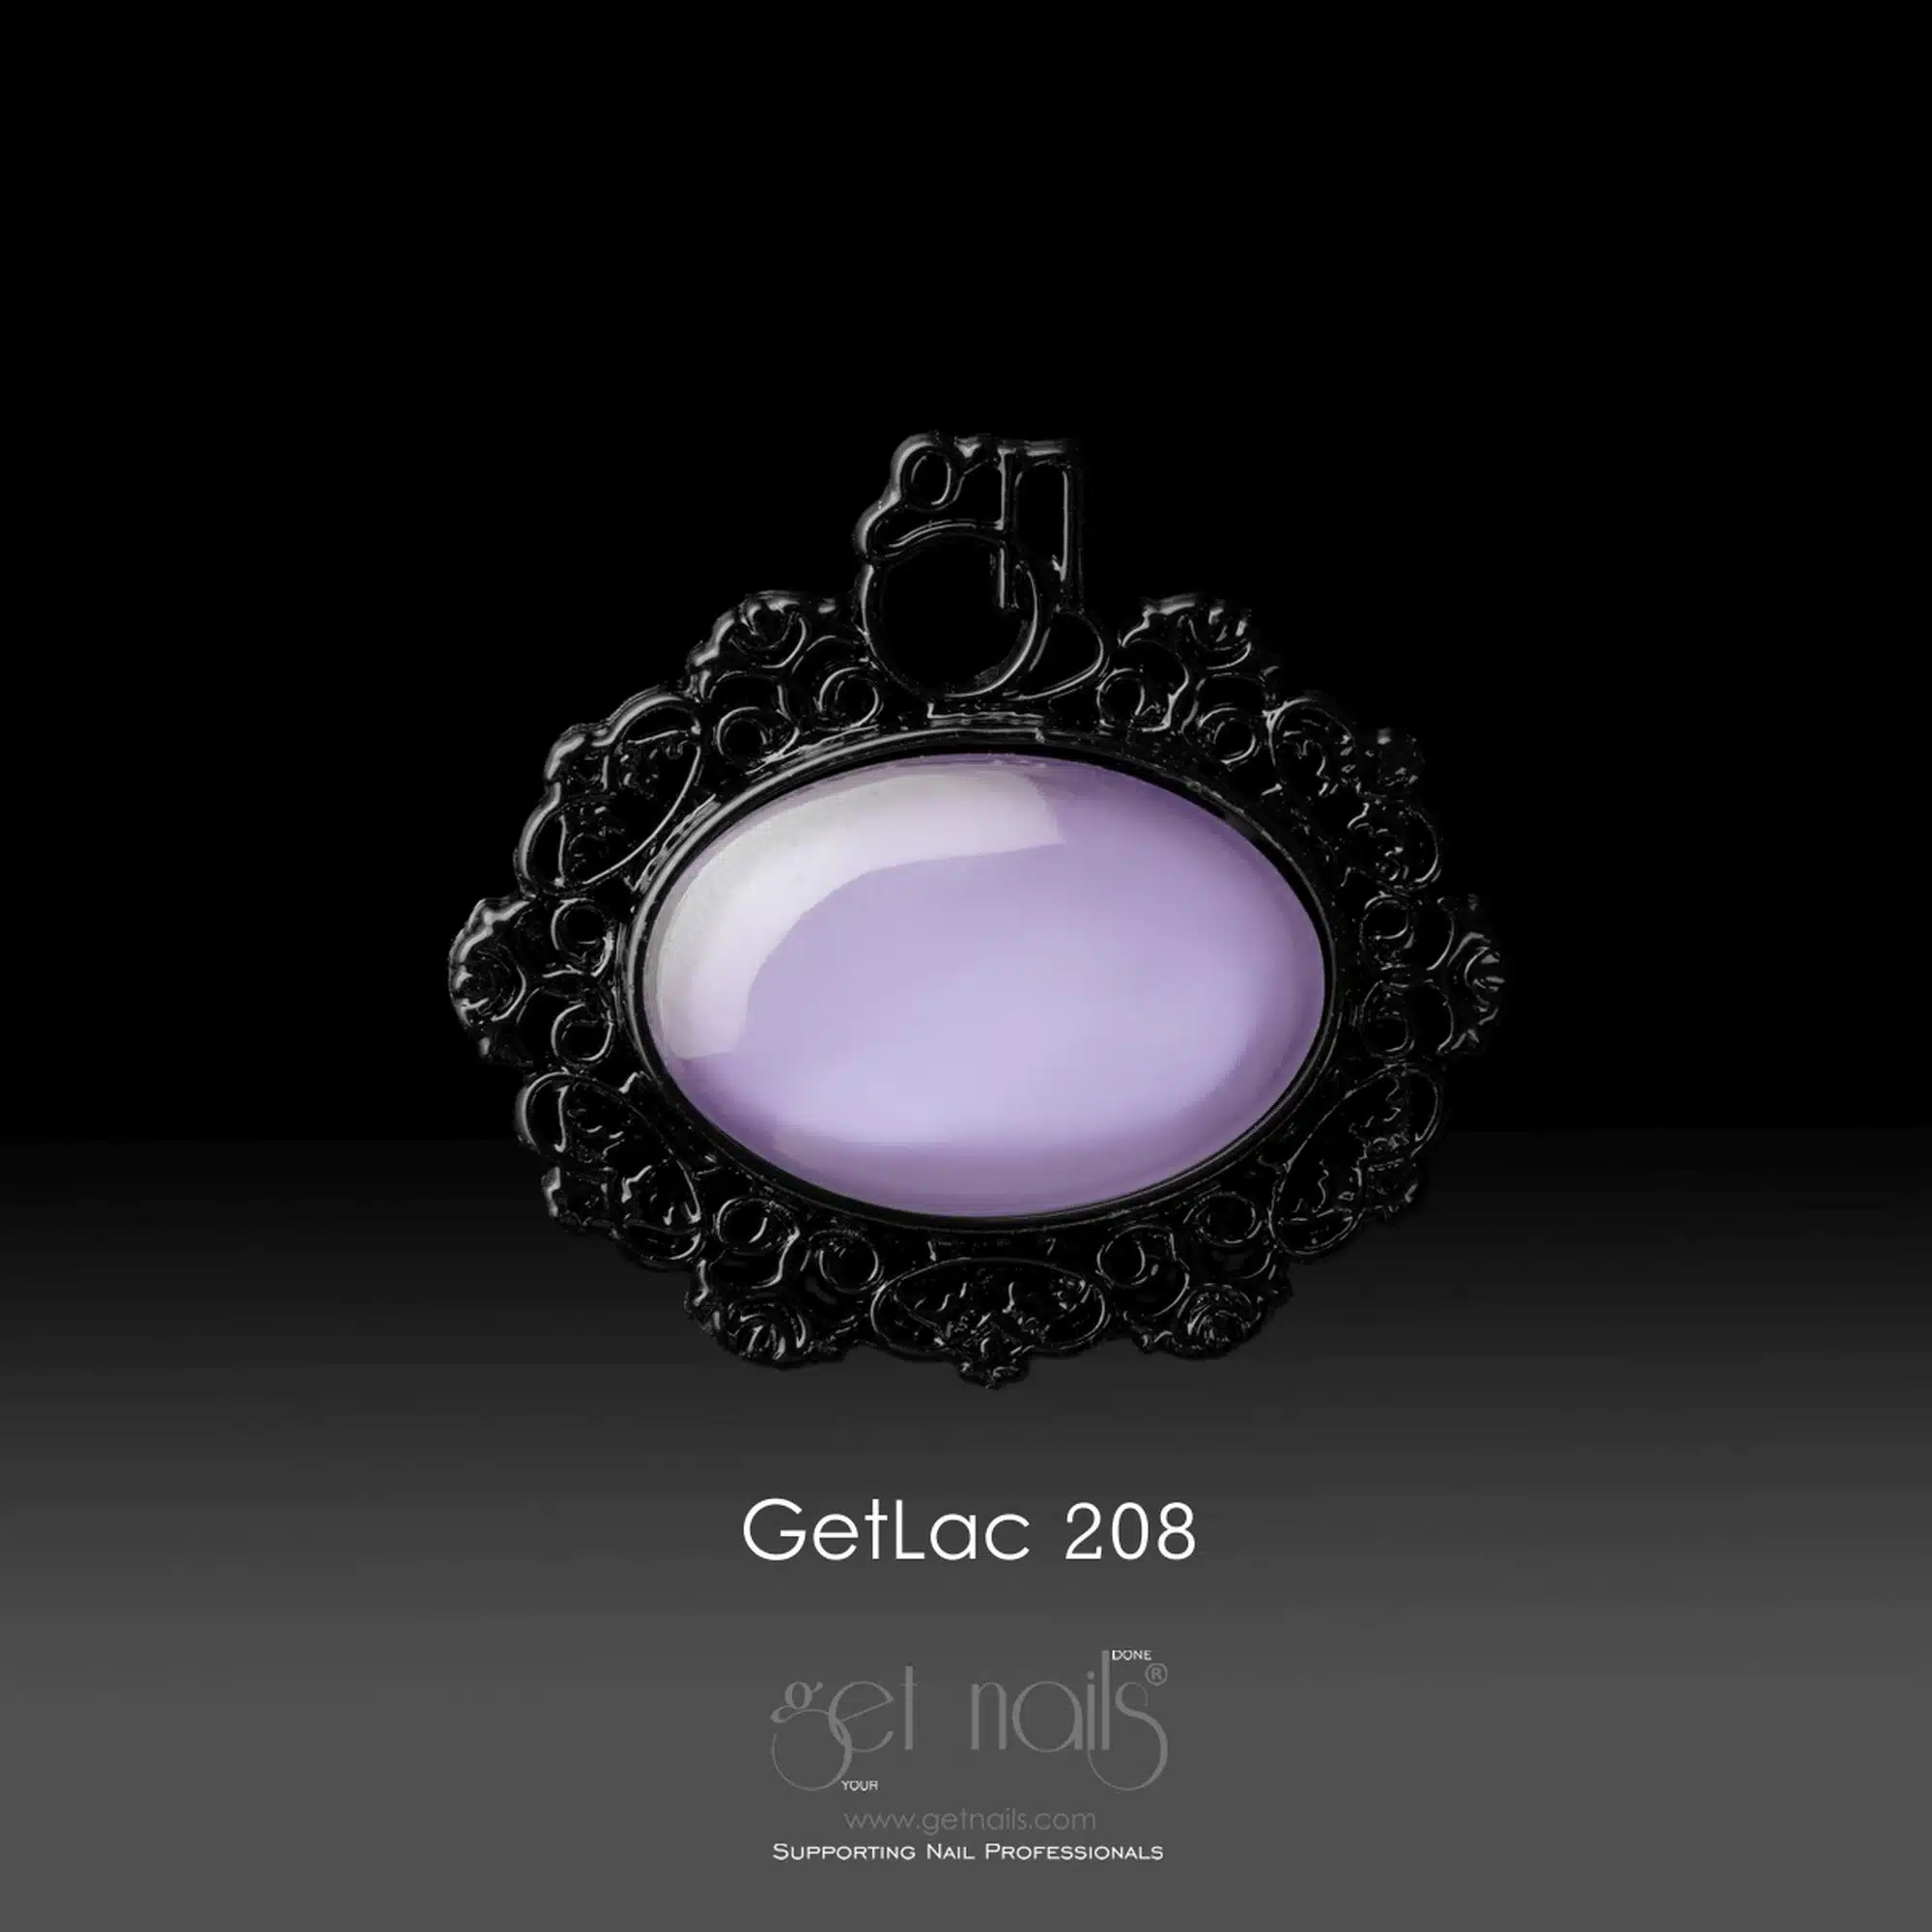 Get Nails Austria - GetLac 208 Amaretto alla lavanda 15g